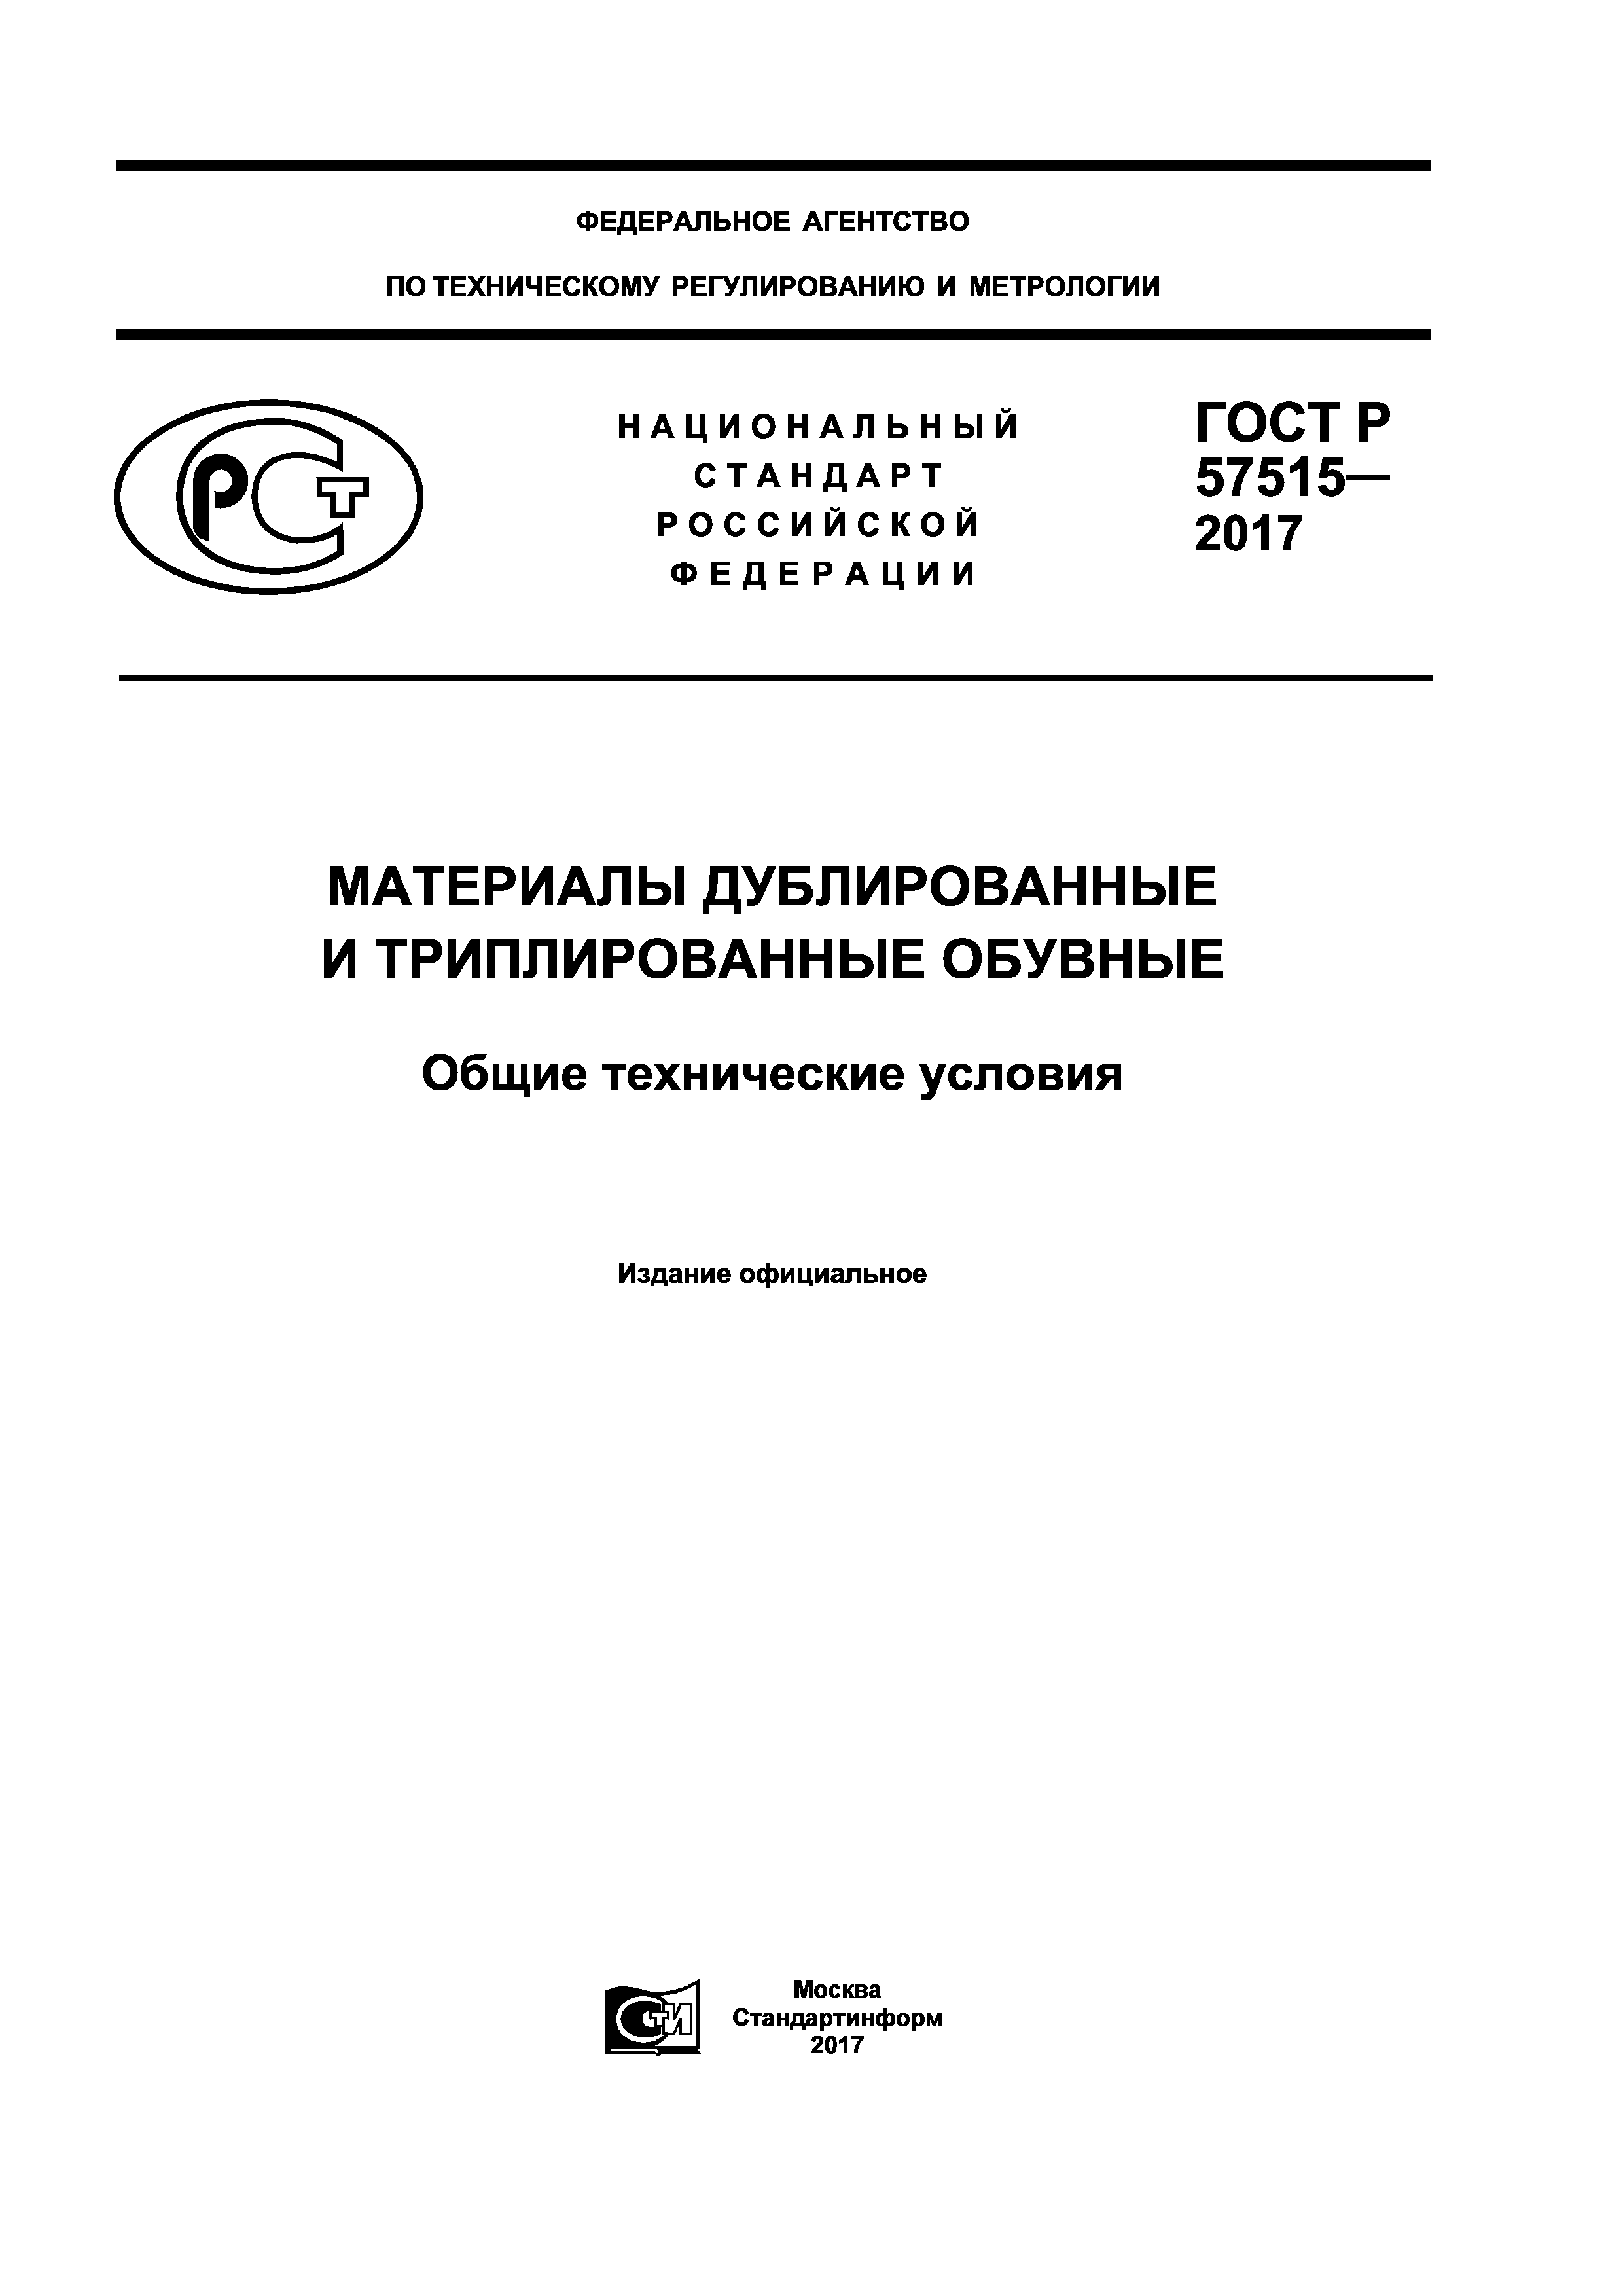 ГОСТ Р 57515-2017